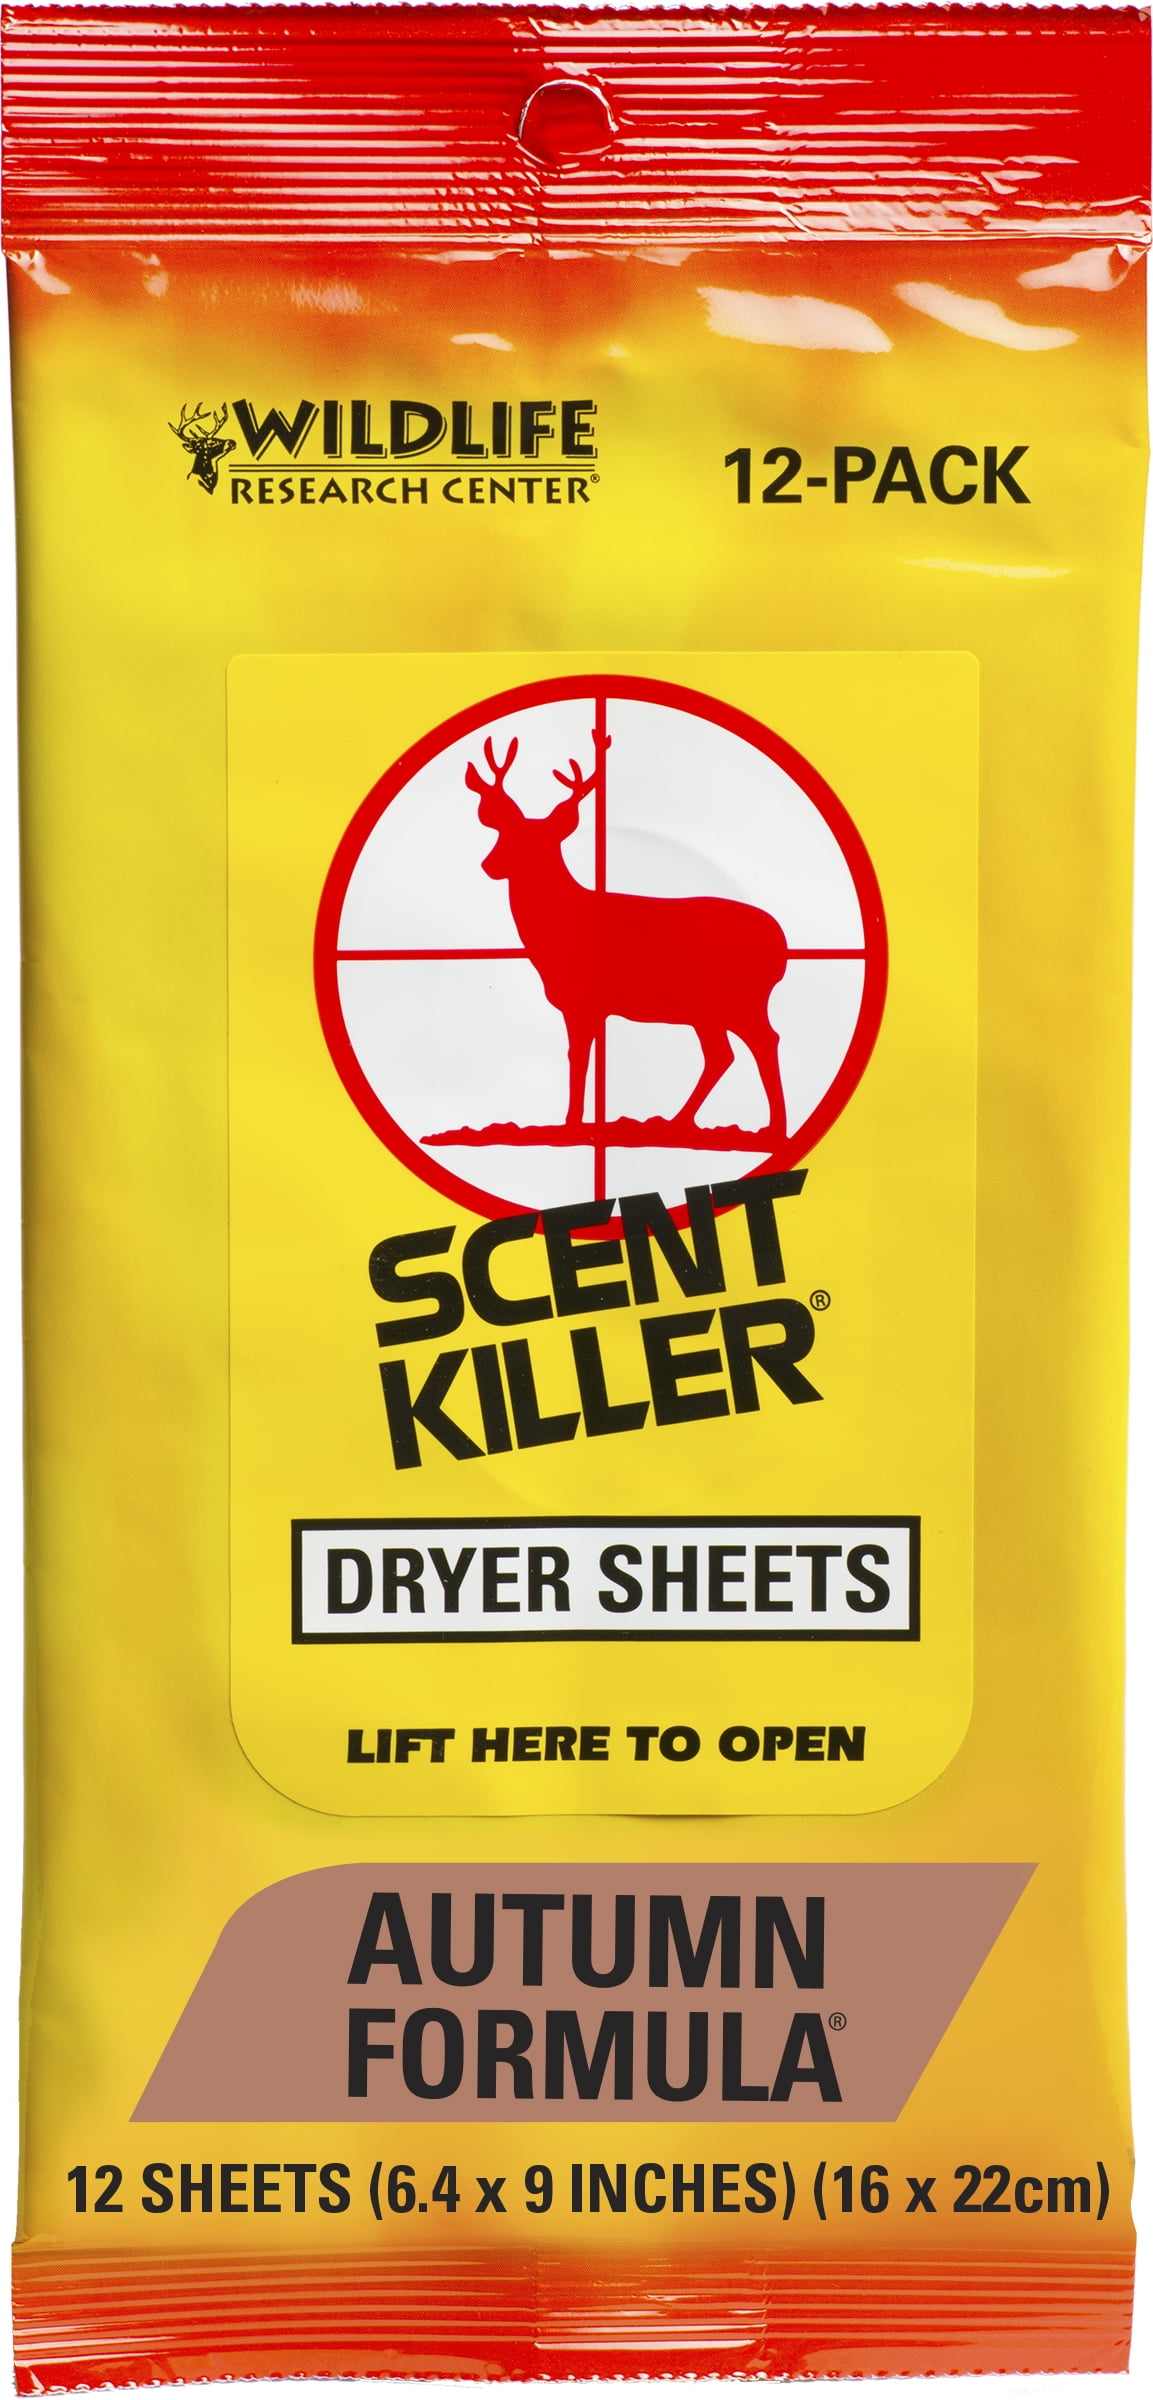 Dryer Sheets - Missouri Poison Center